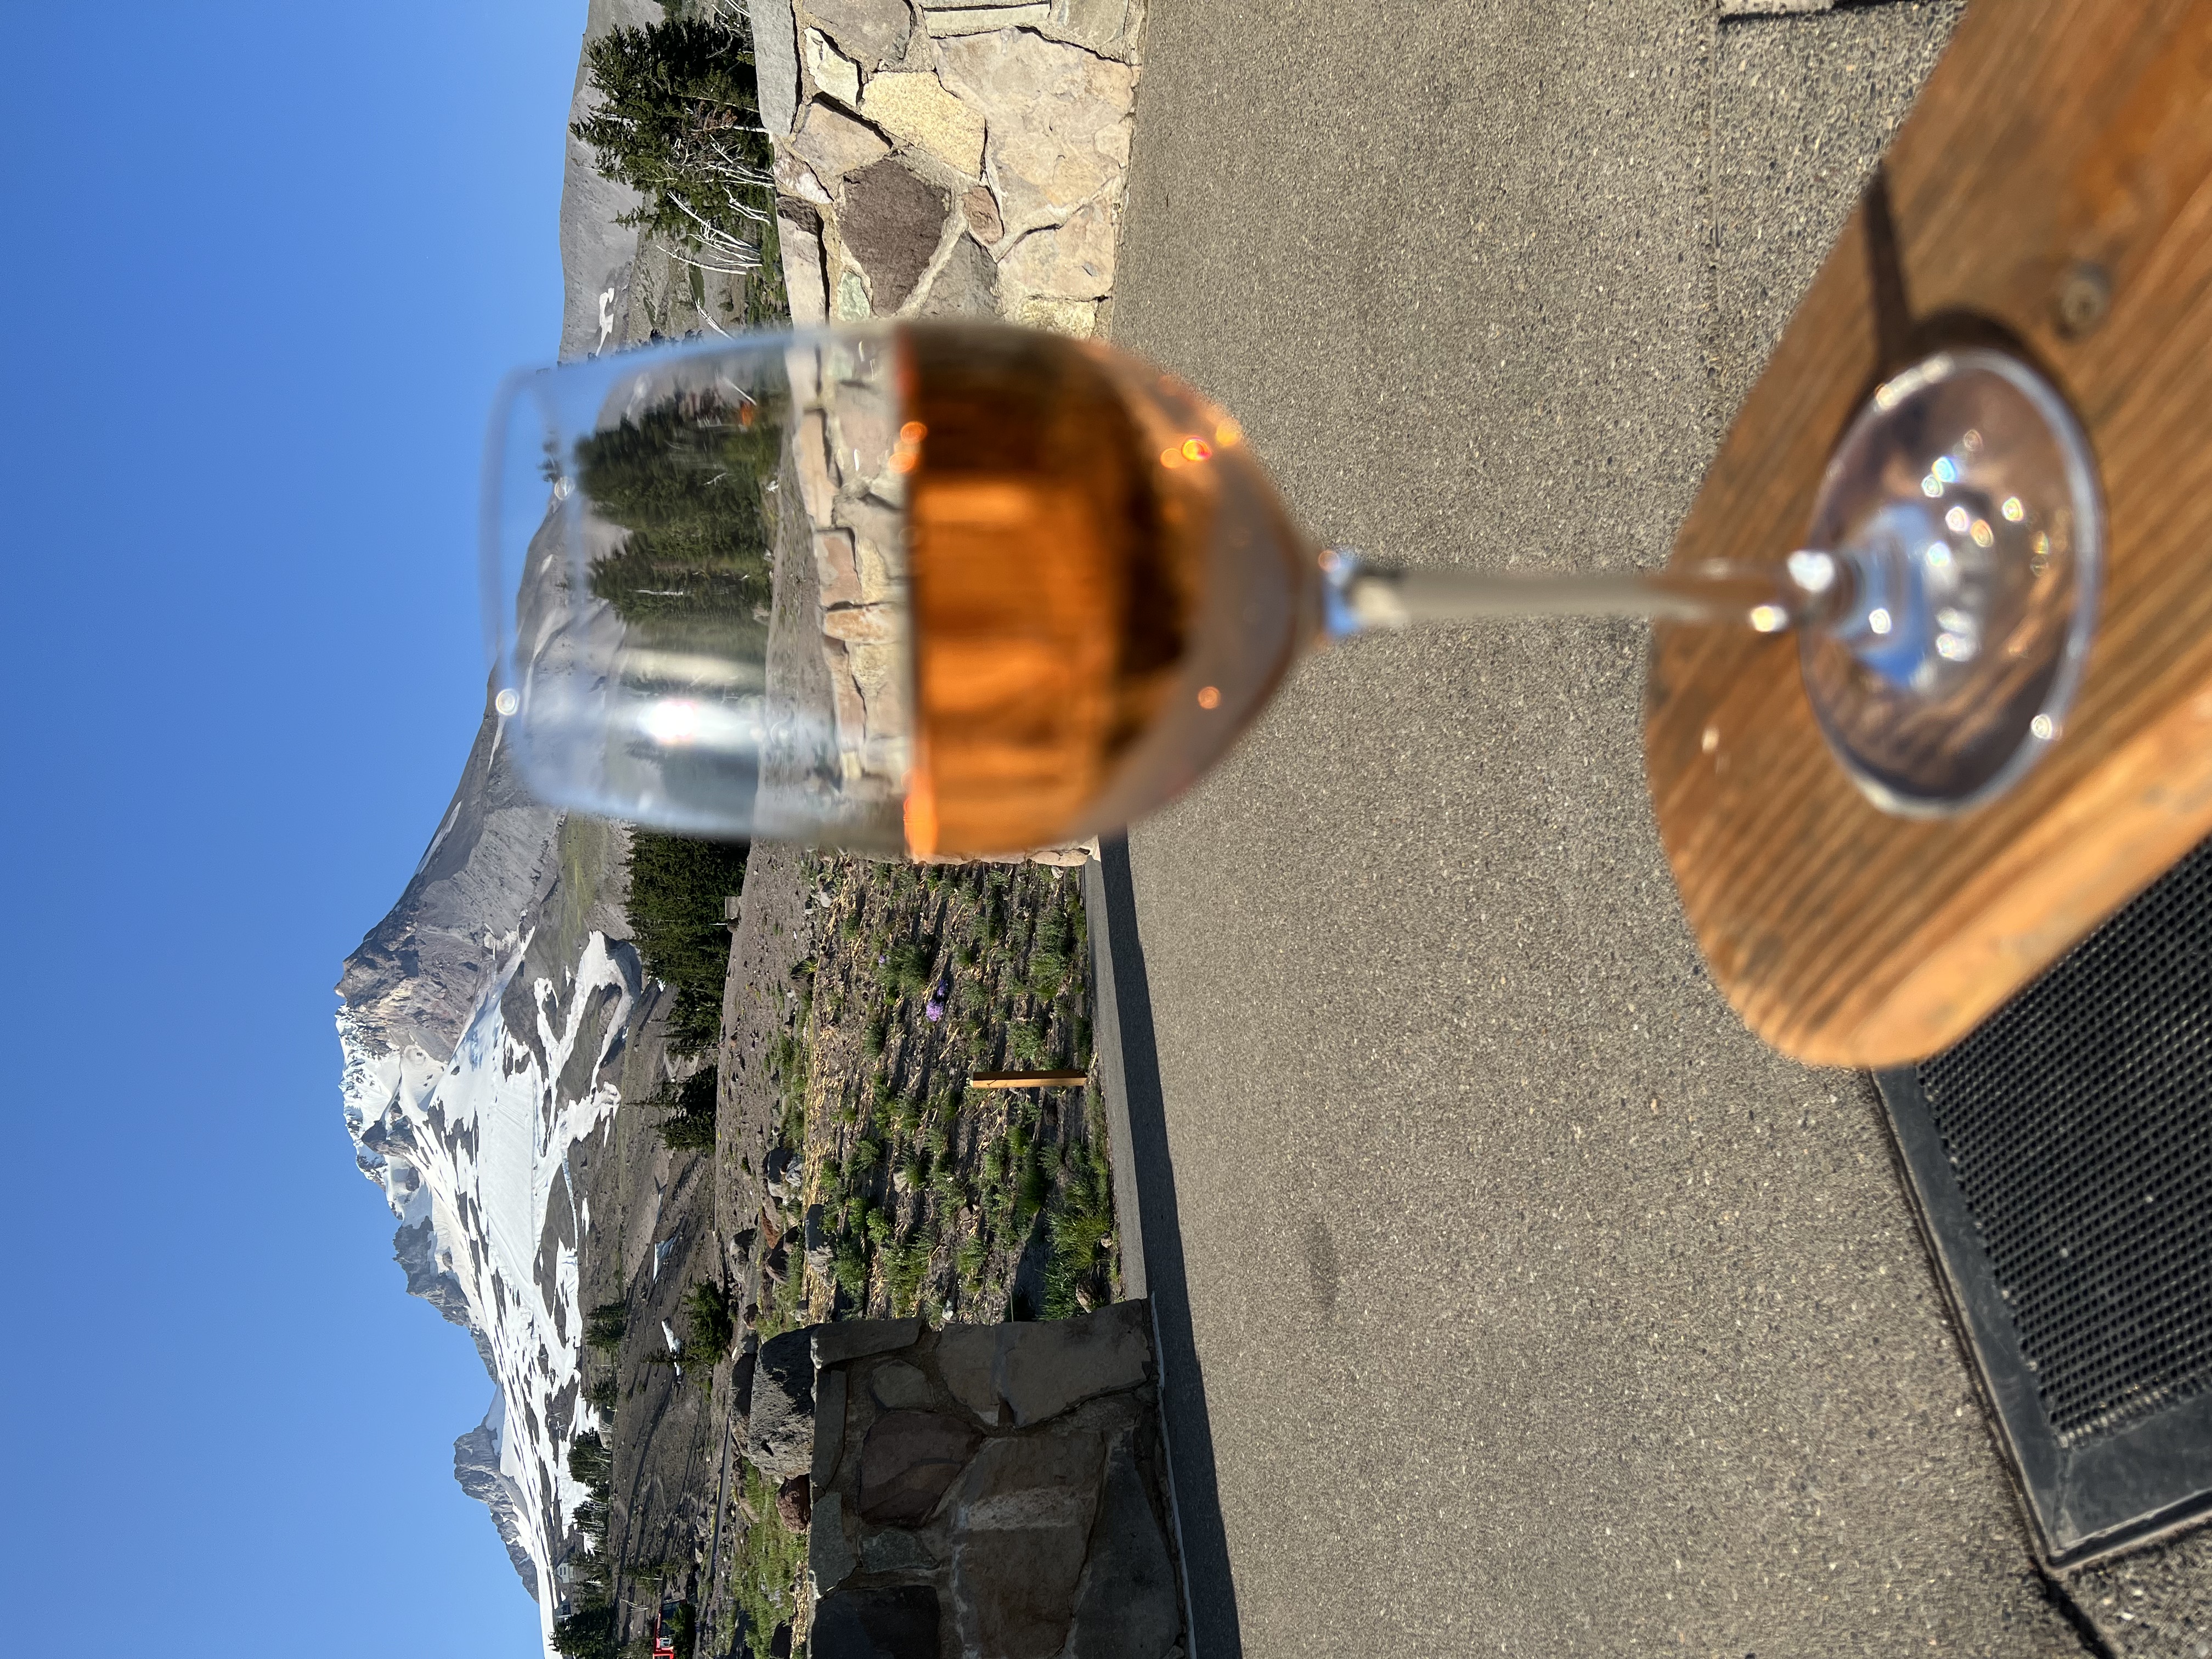 Glass of wine and Mt Hood